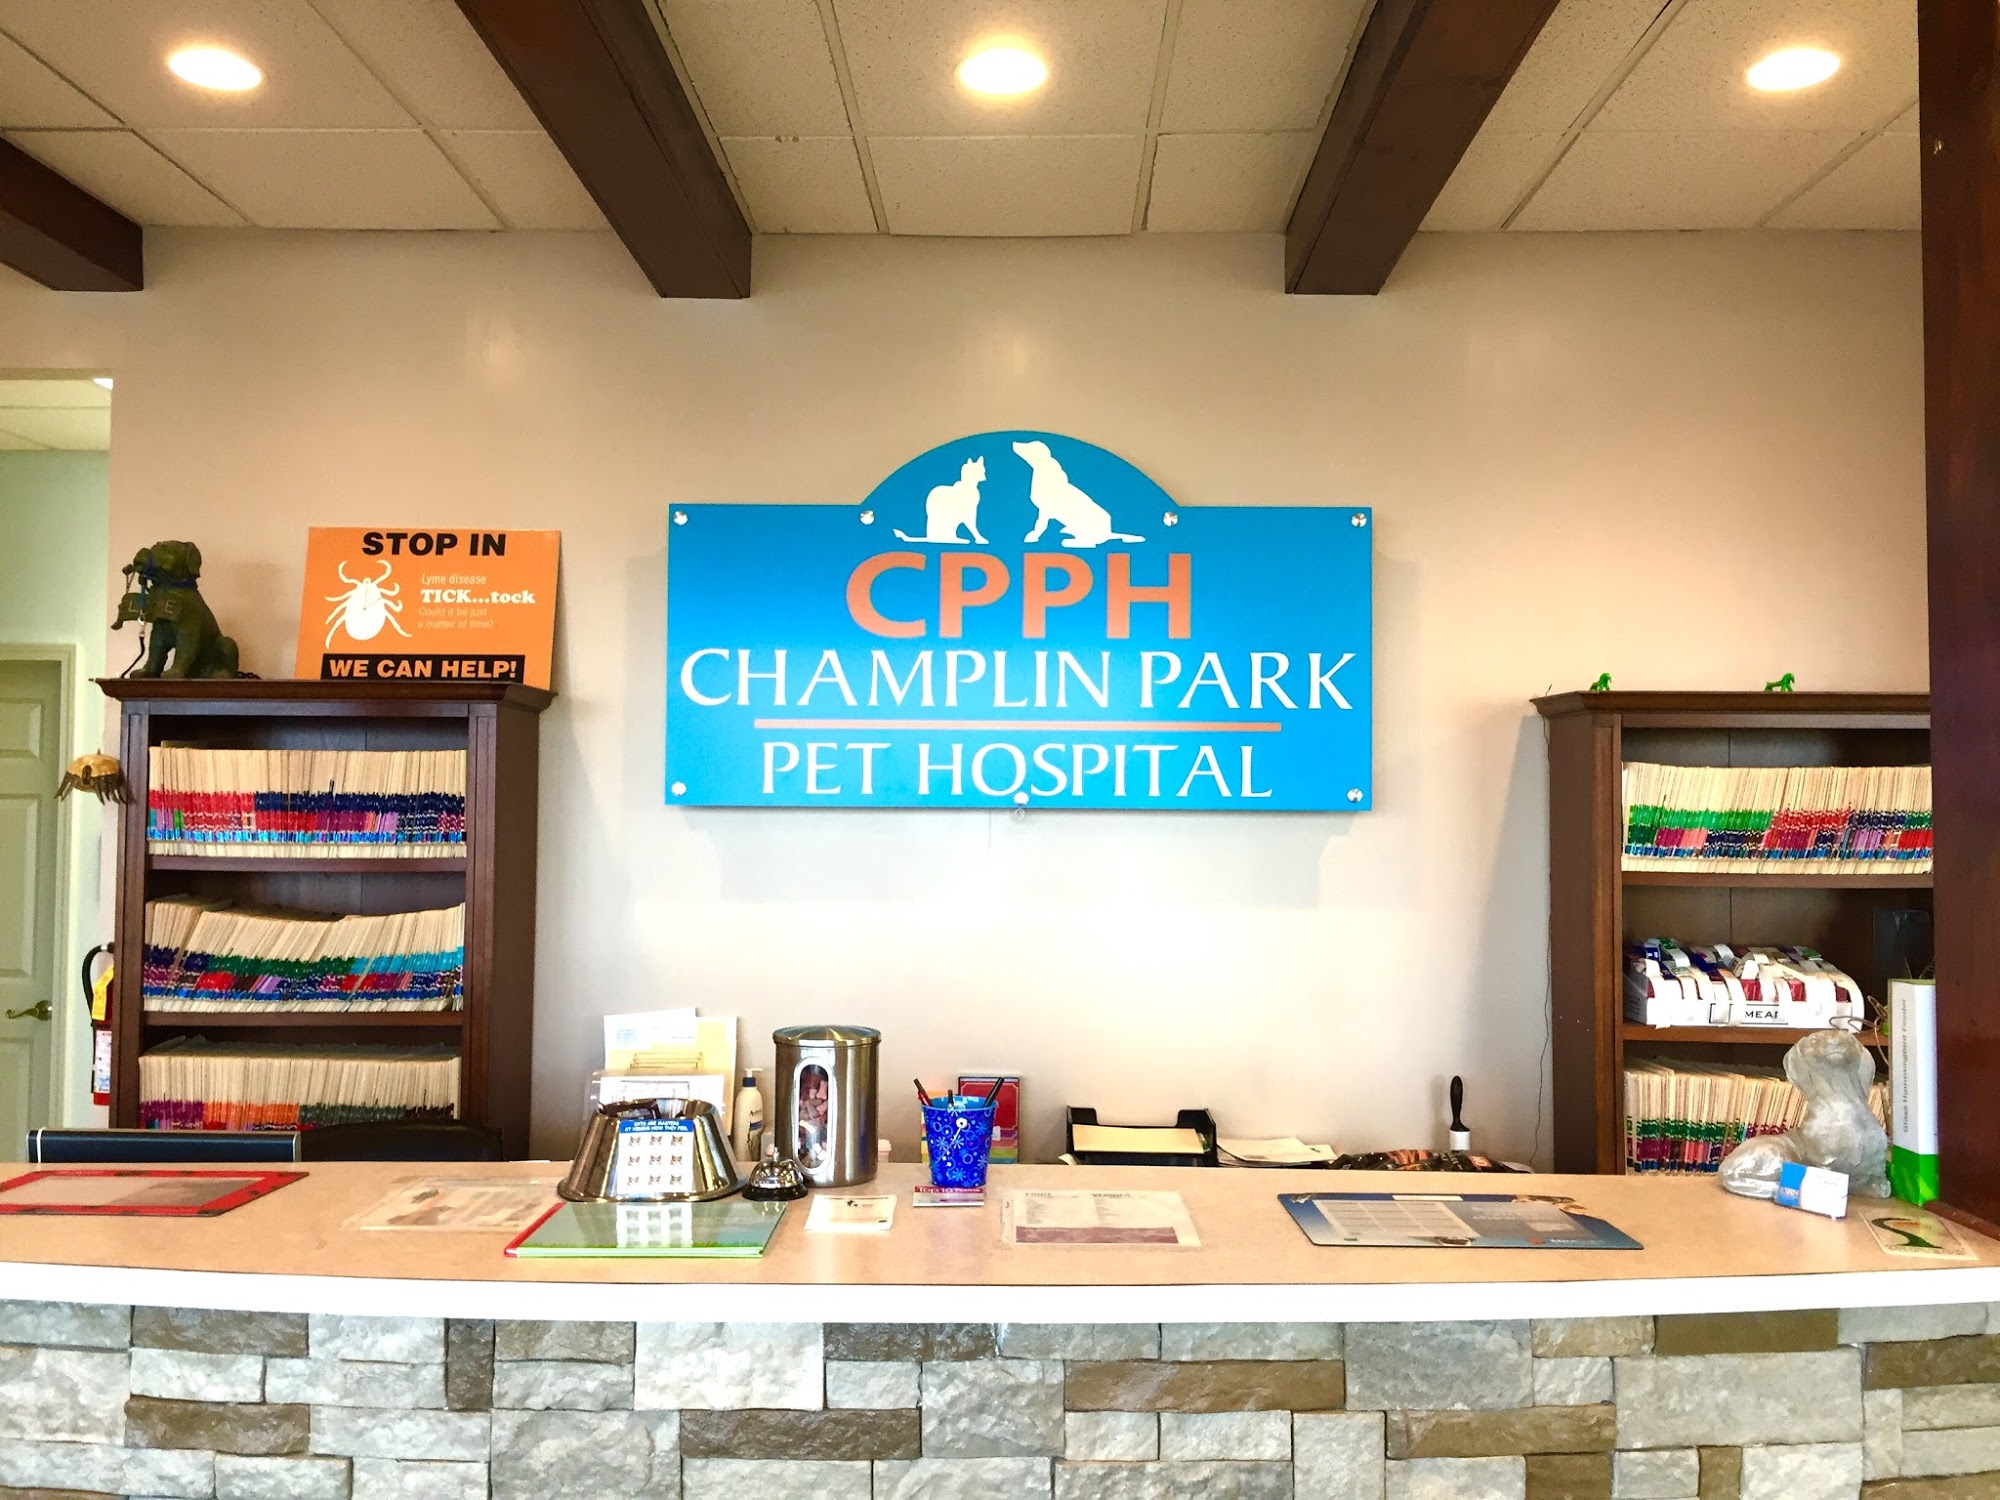 Champlin Park Pet Hospital